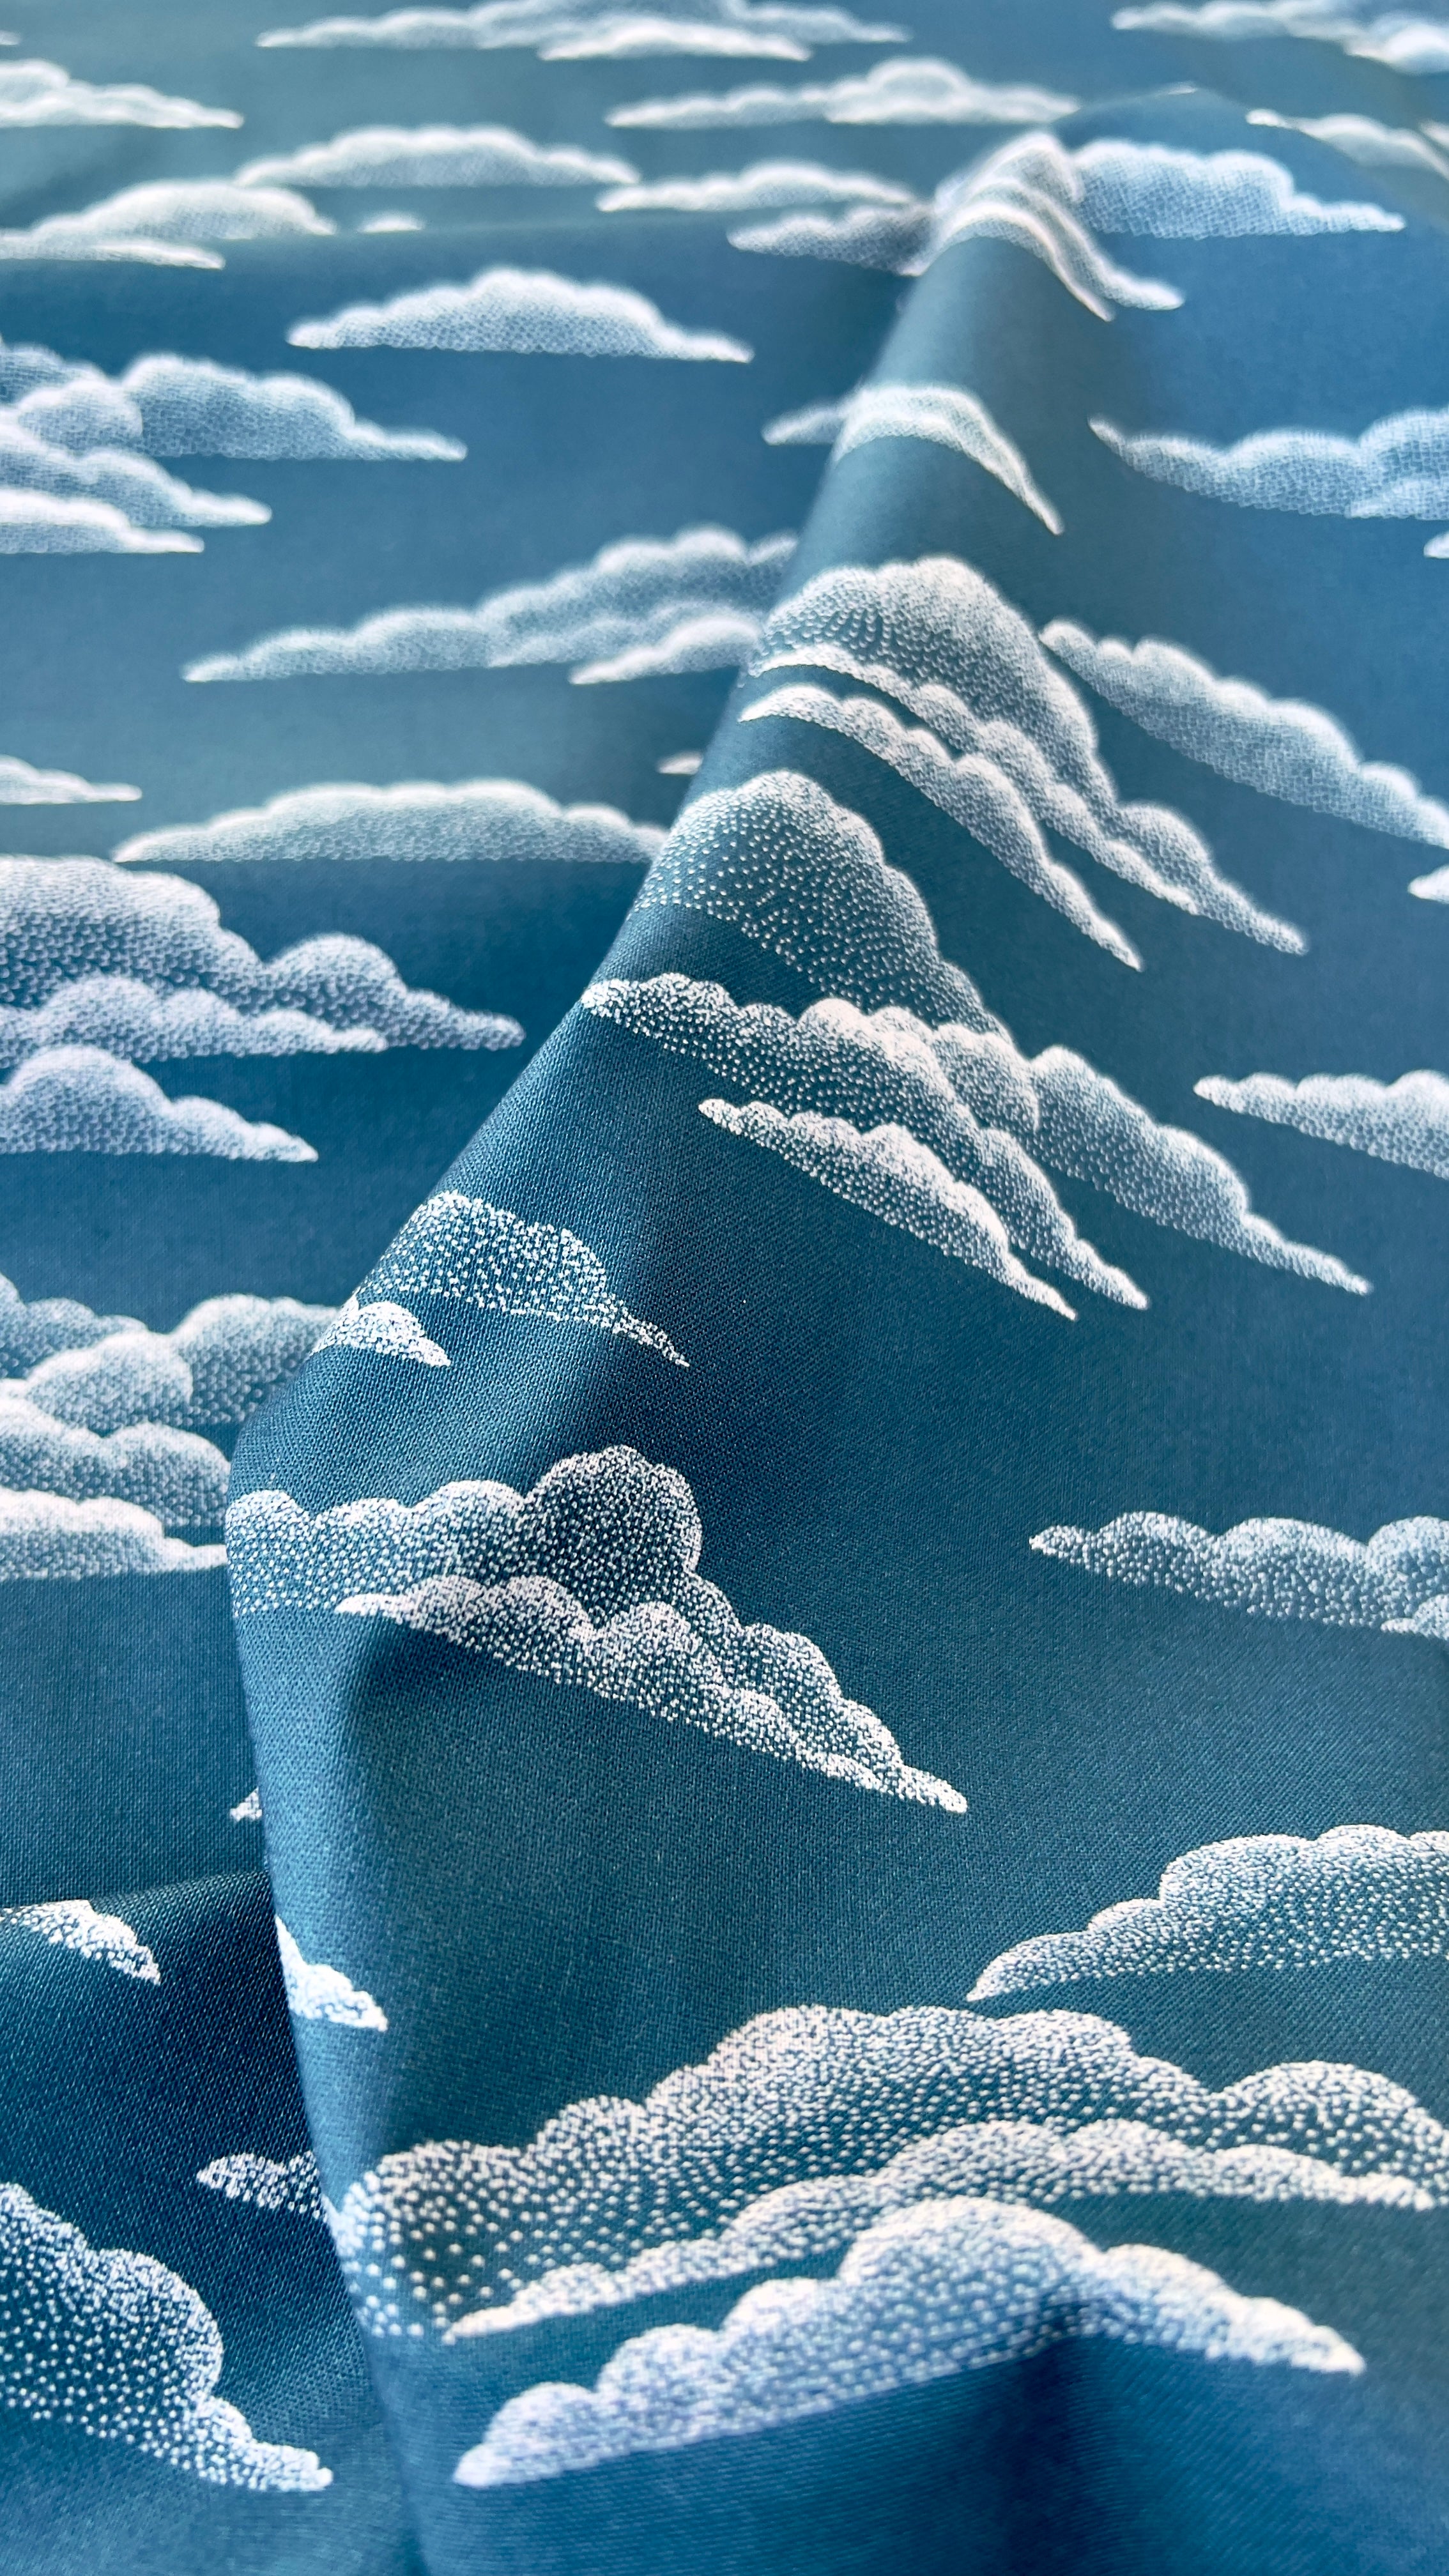 Baltic Woodland - Light Clouds Organic Cotton from Cloud9 Fabrics